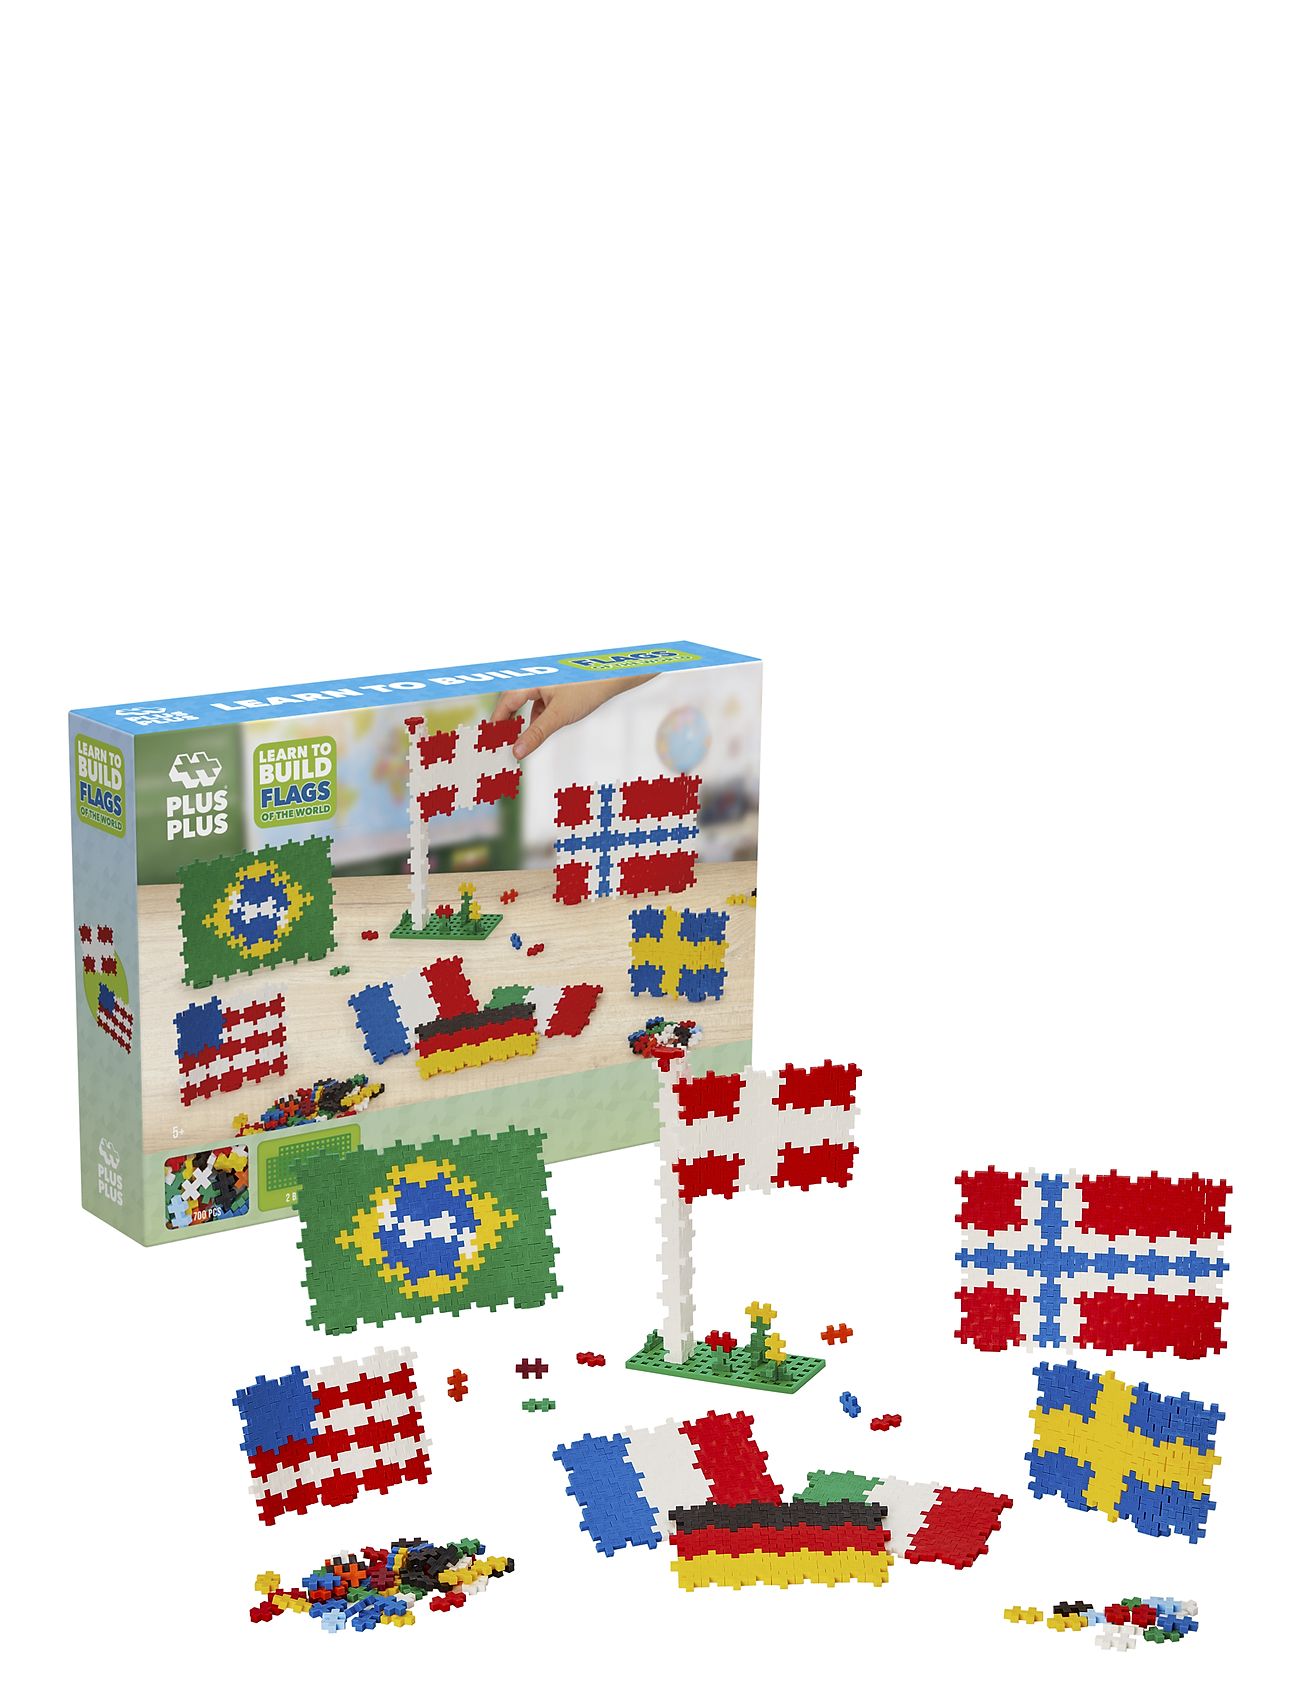 Plus-Plus Learn To Build Flags Of The World Toys Building Sets & Blocks Building Sets Multi/patterned Plus-Plus